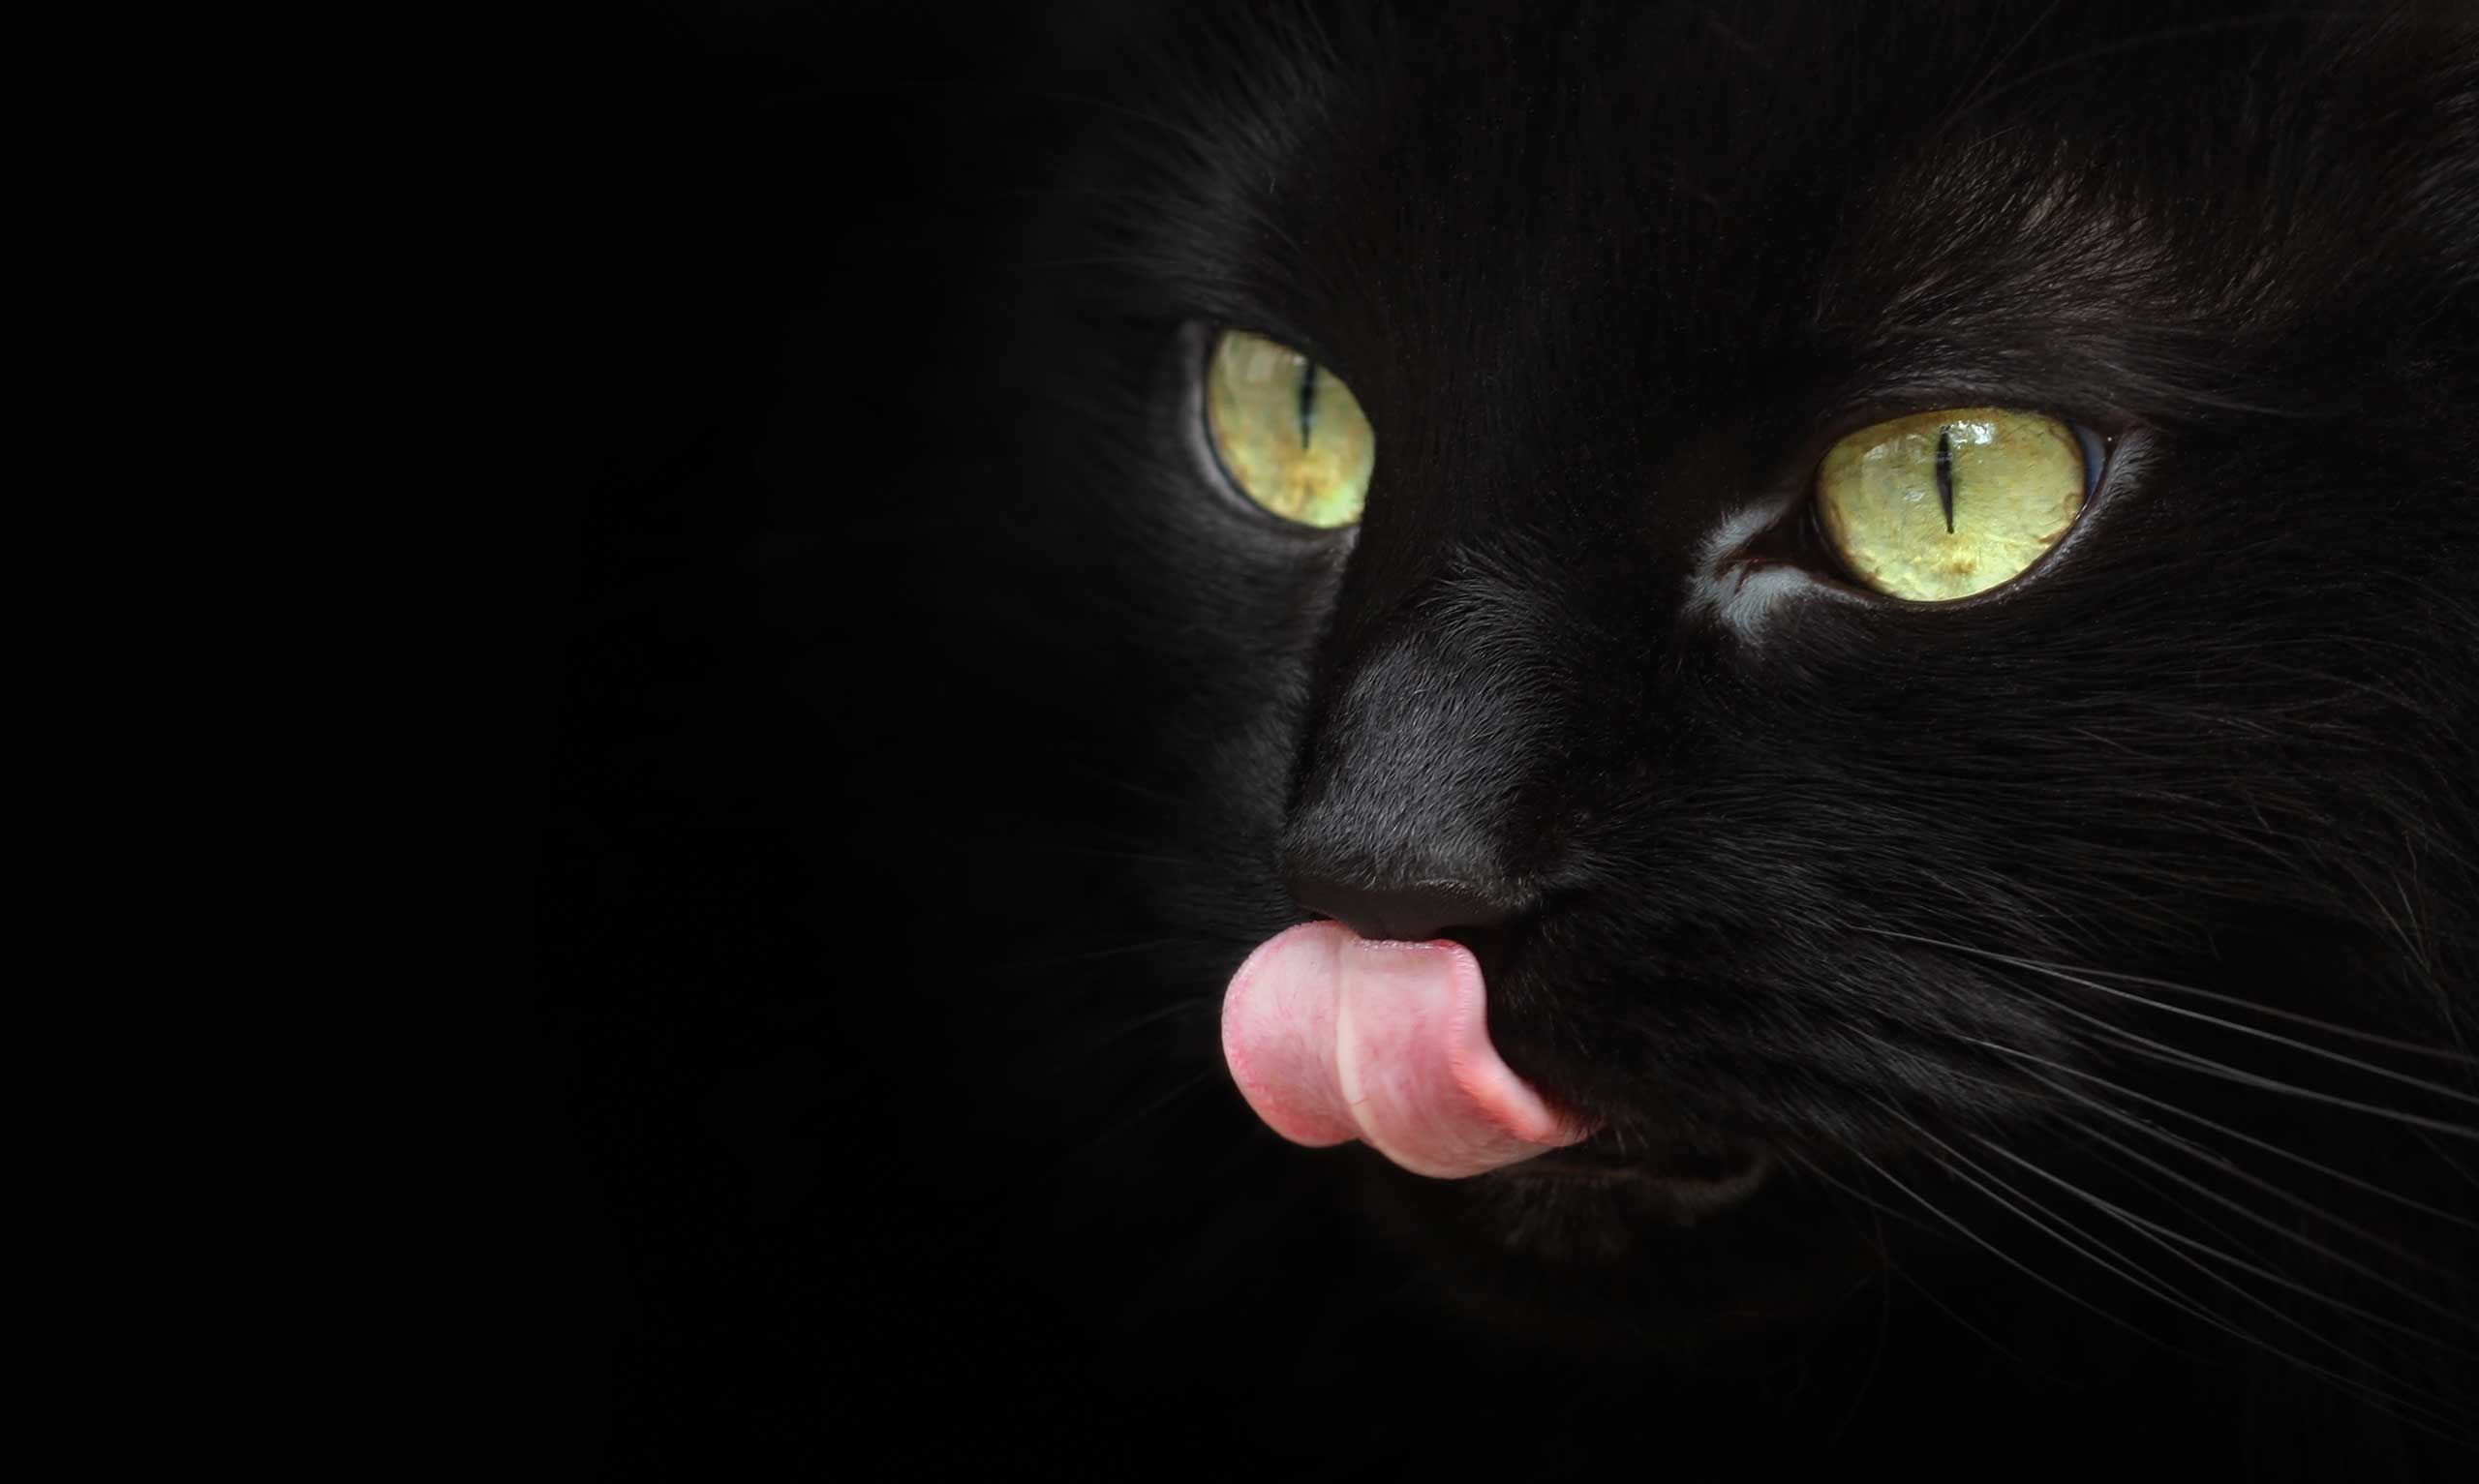 Porque é que a língua do meu gato parece uma lixa?